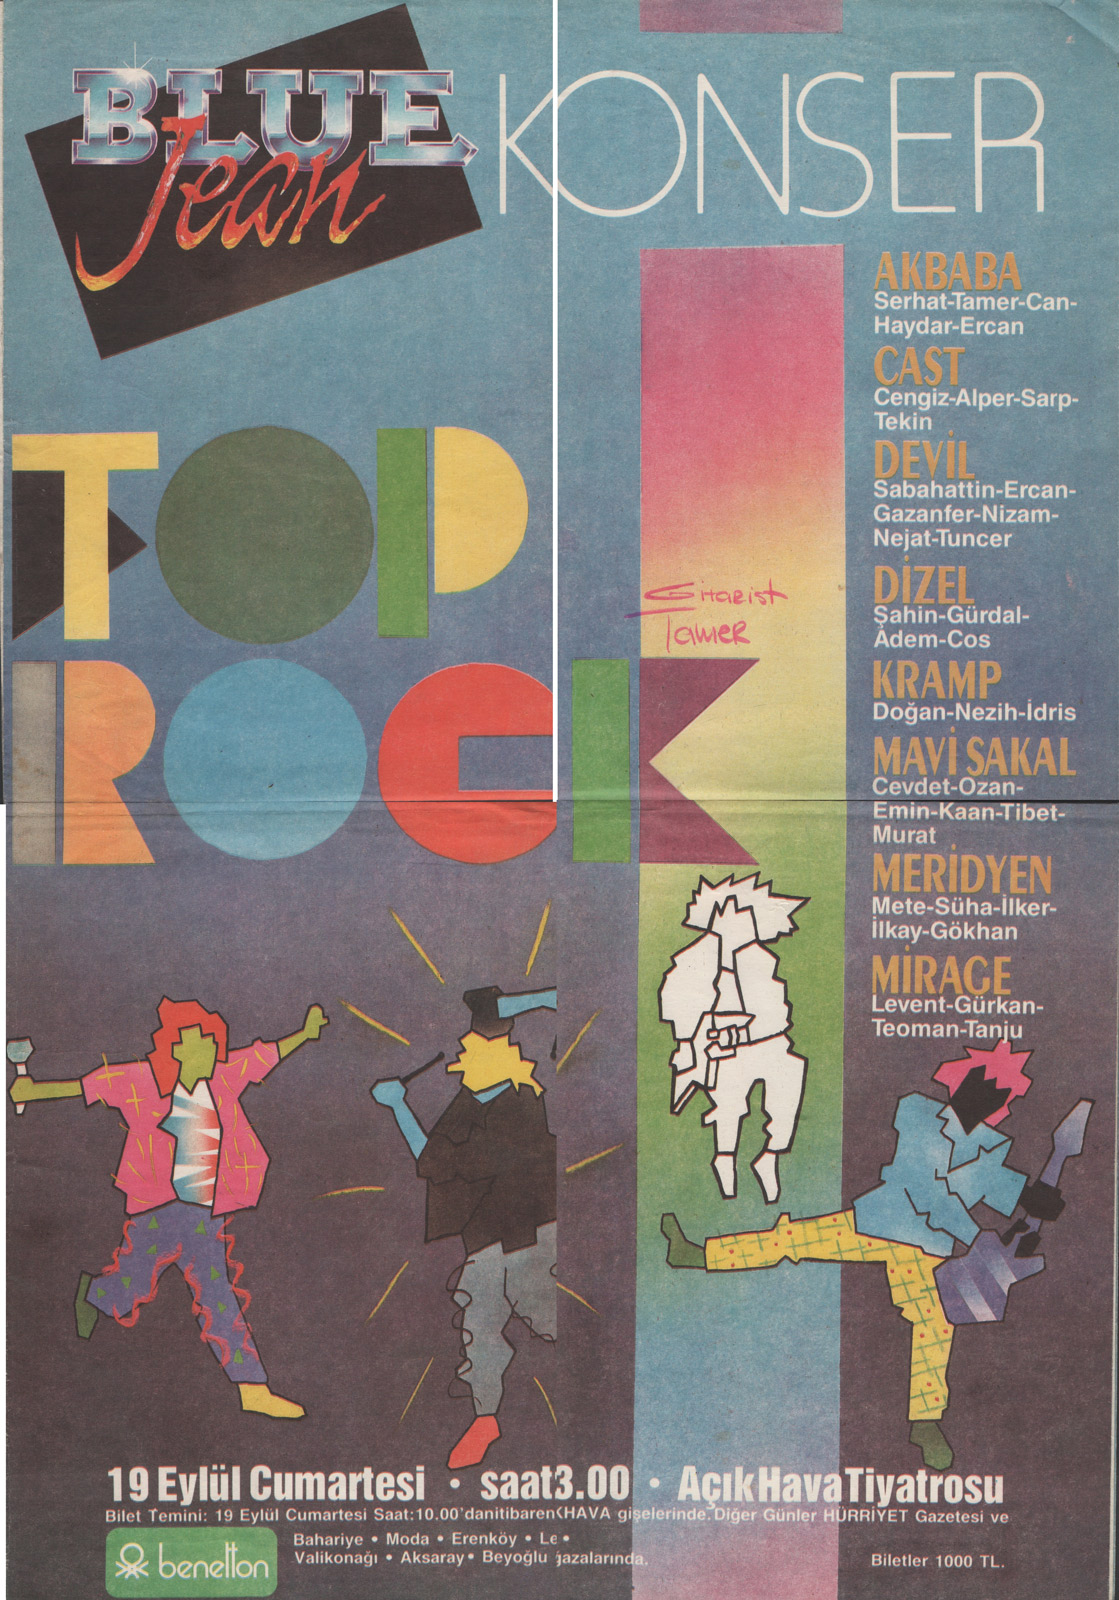 1987-09-19-Blue-Jean-Top-Rock-(Akbaba,-Devil,-Dizel,-Kramp,-Mavi-Sakal,-Meridyen,-Mirage,-Cast)-(1)